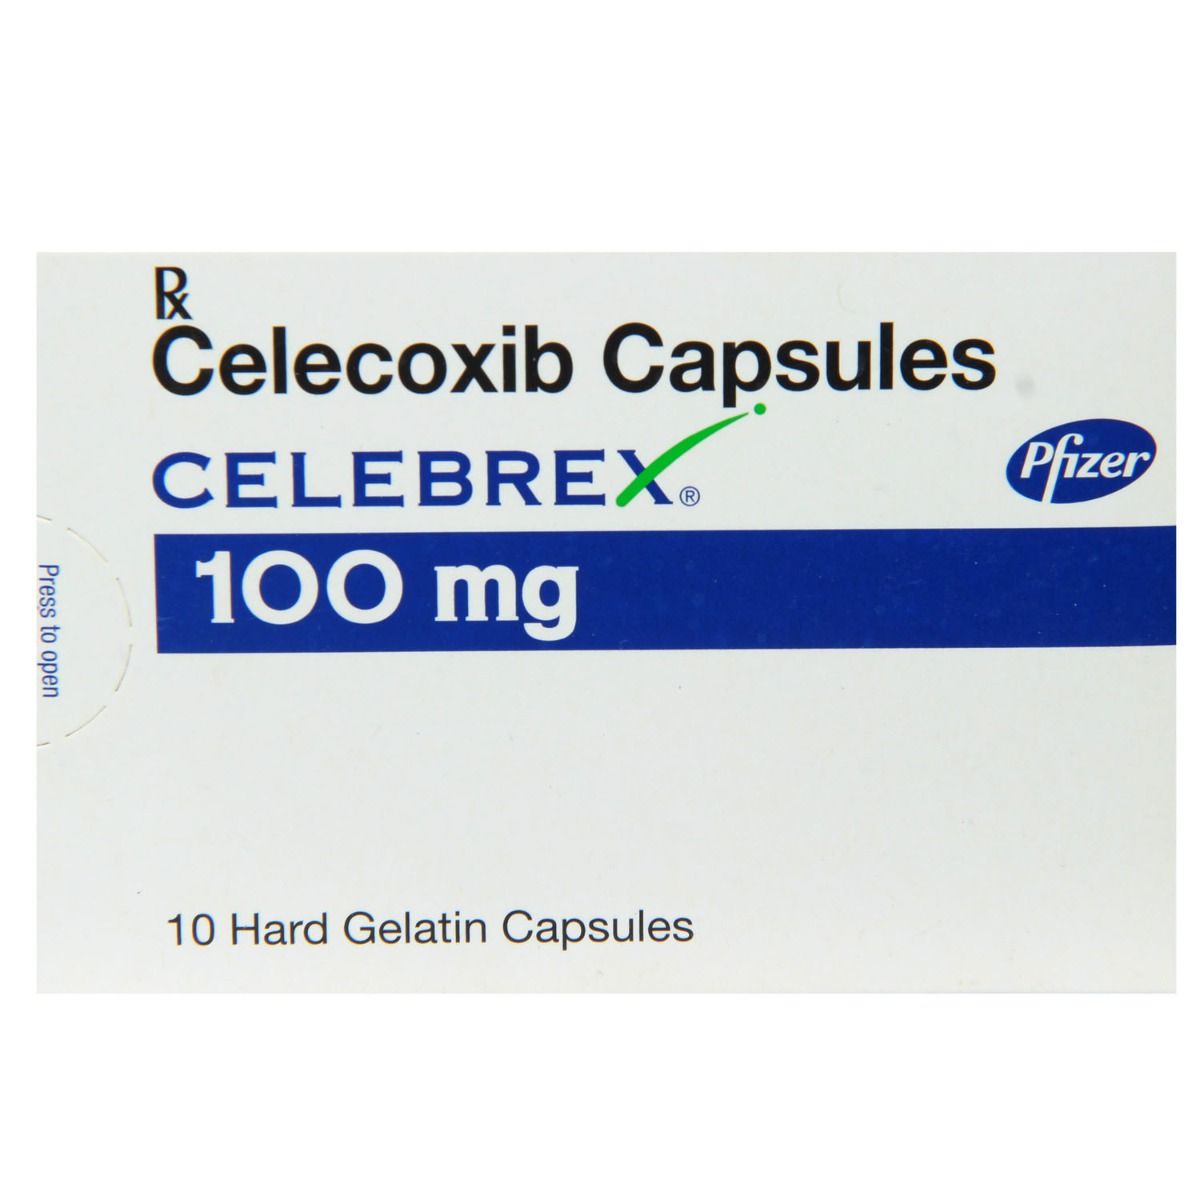 Celebrex 100mg Capsule Uses Side Effects Price Apollo Pharmacy